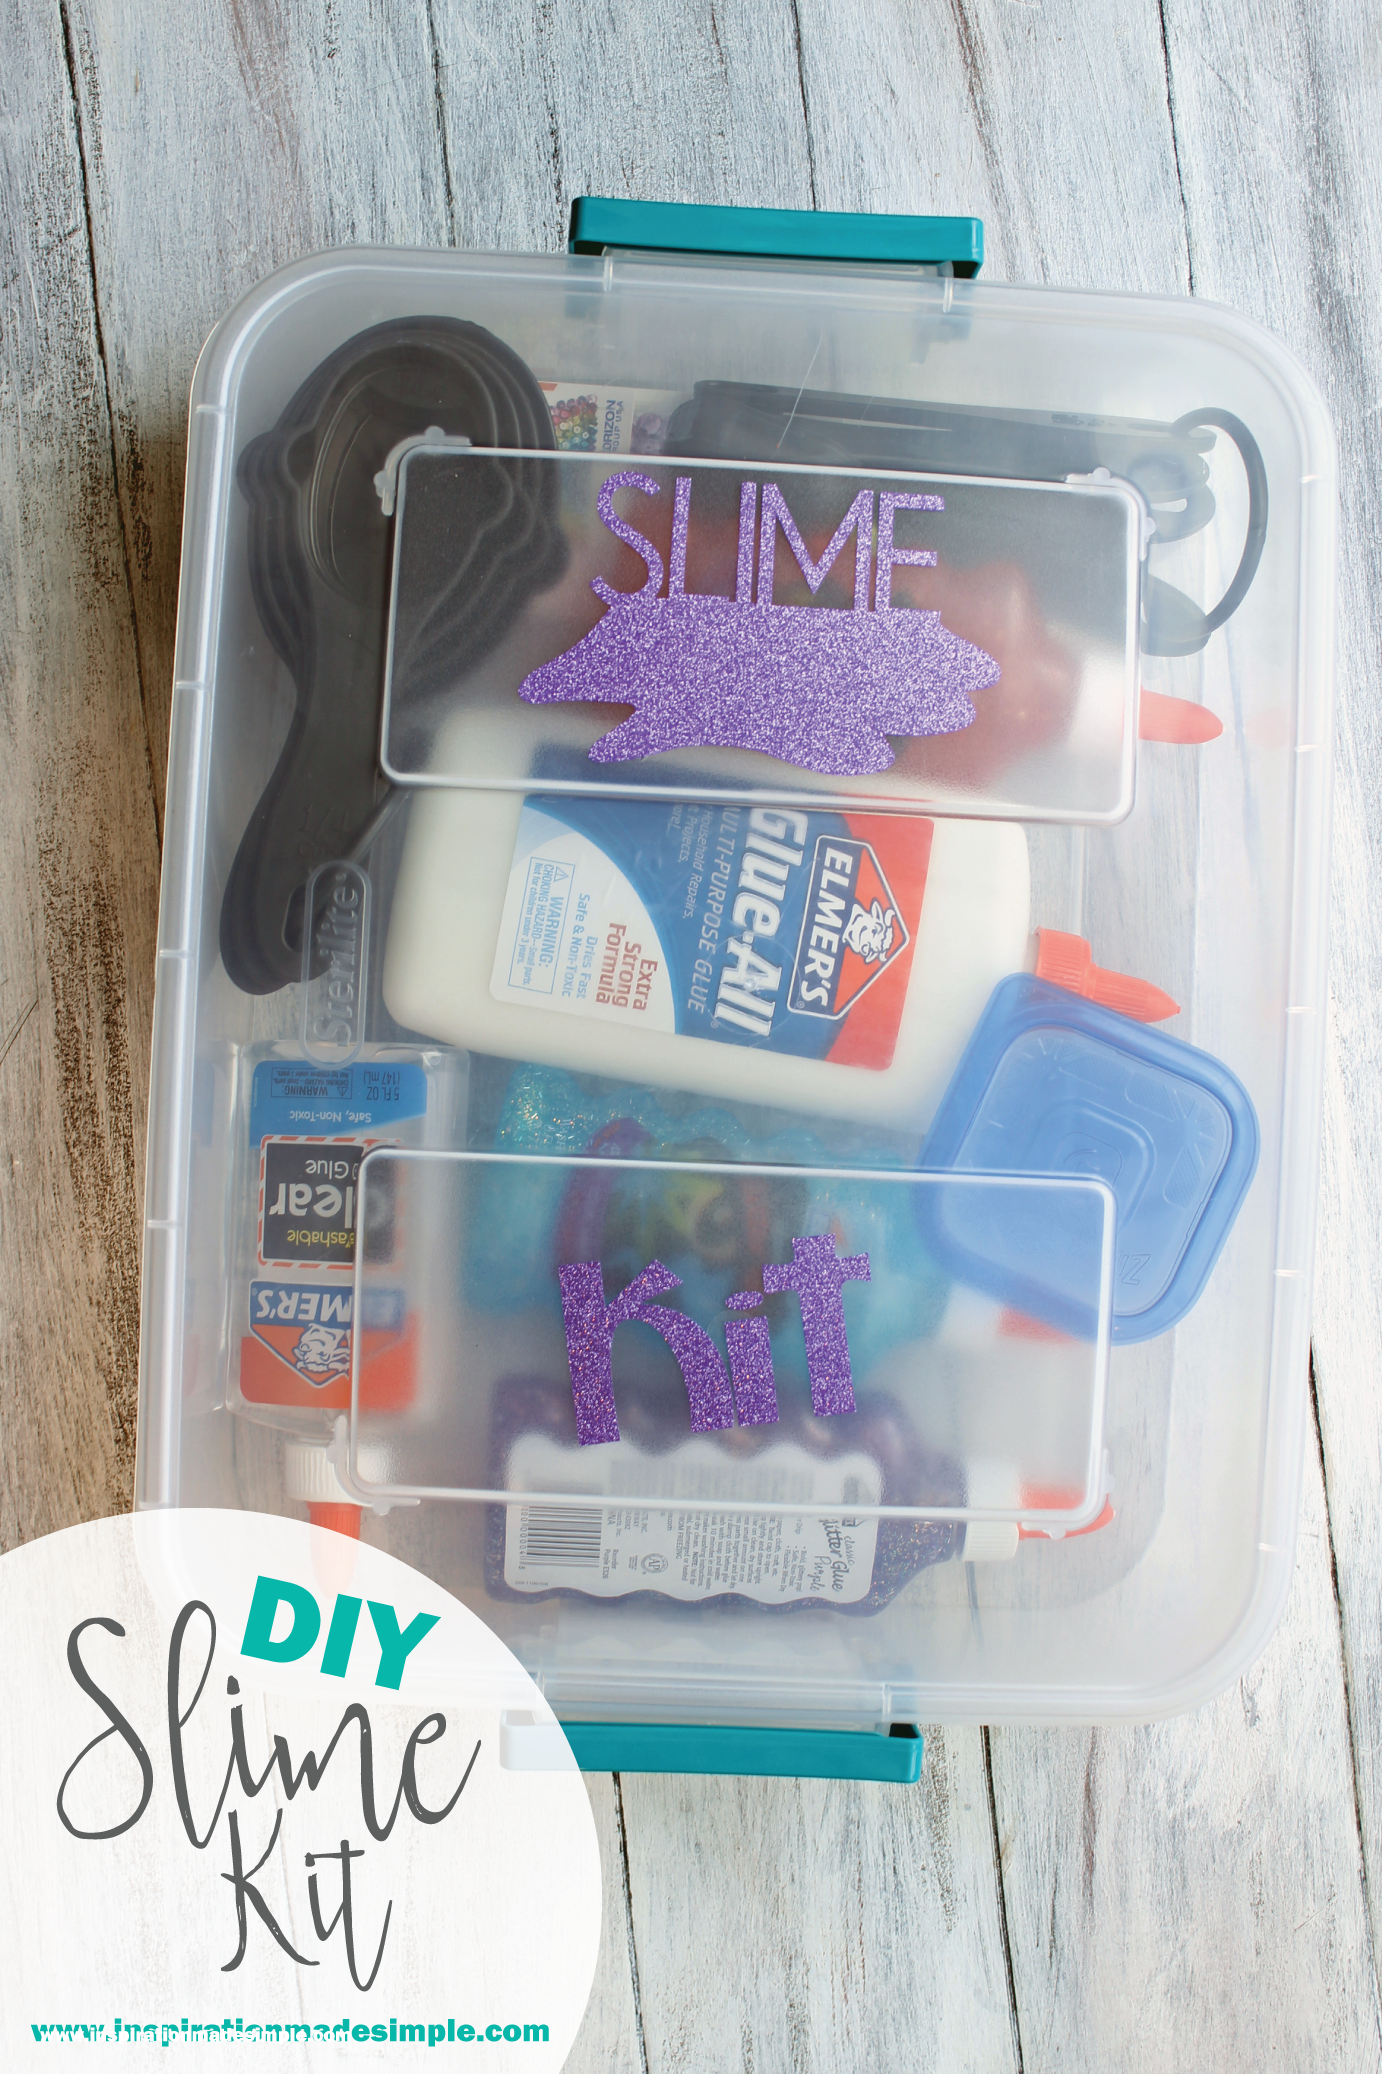 DIY Slime Kit - Inspiration Made Simple